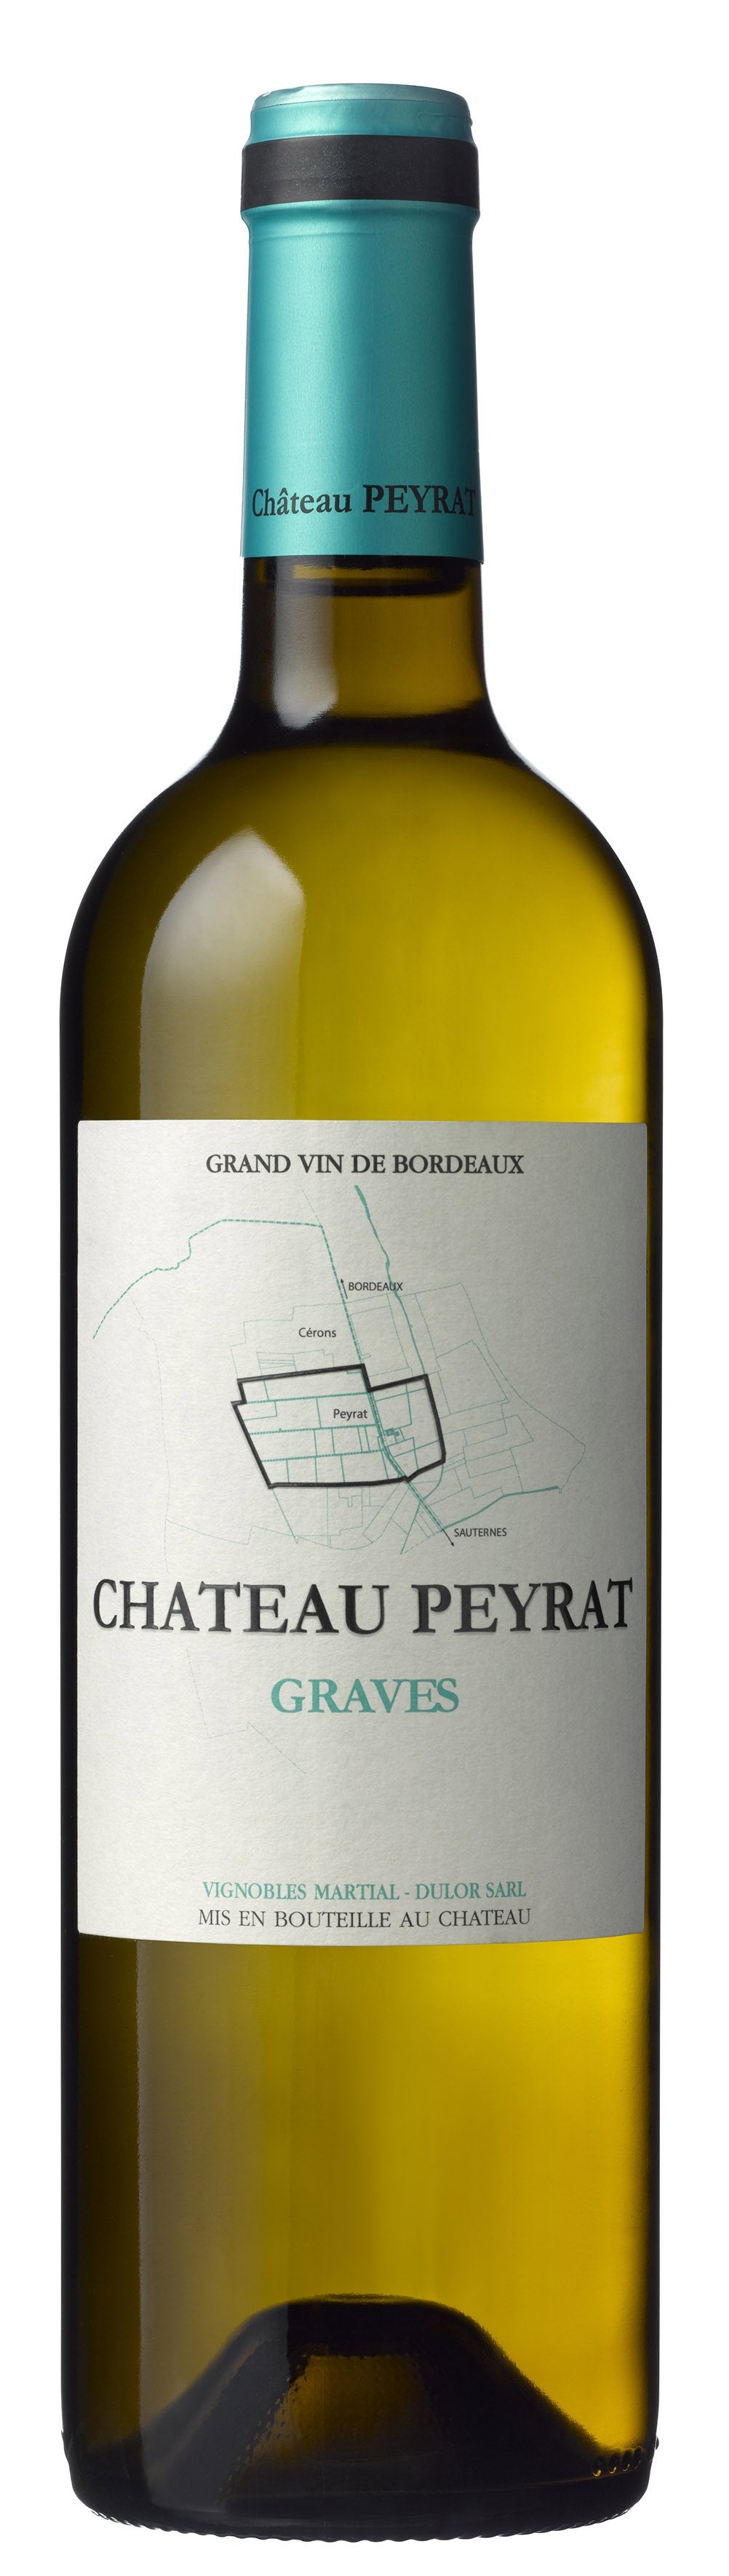 Chateau Peyrat Graves Blanc 2016